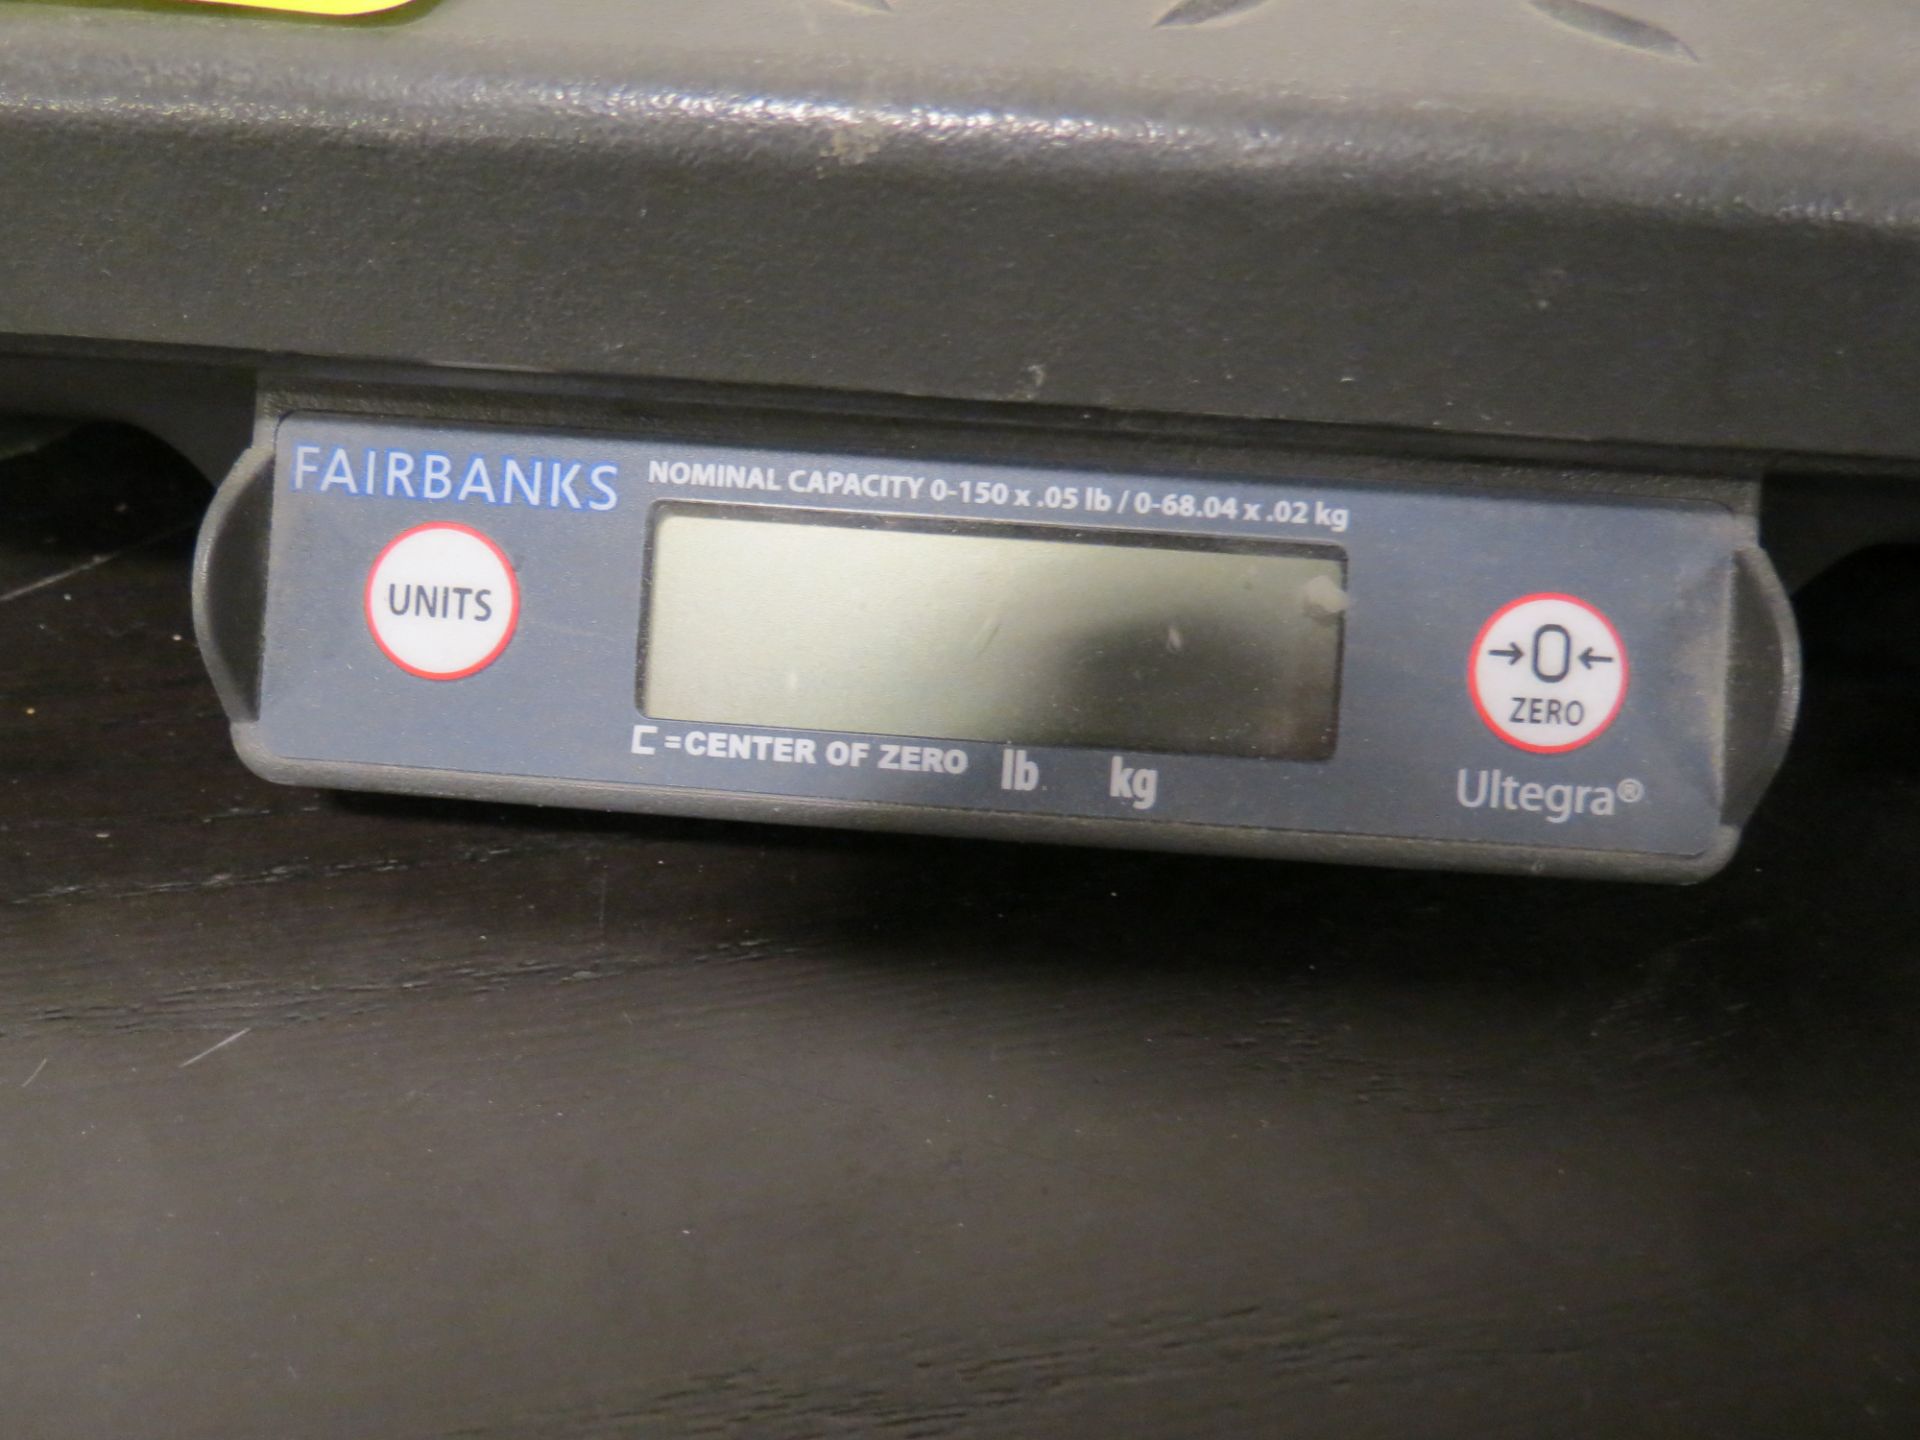 Zebra ZP450 Label Printer, Fairbanks SCB-R9000-14U scale w/ Level Indicator - Image 3 of 3